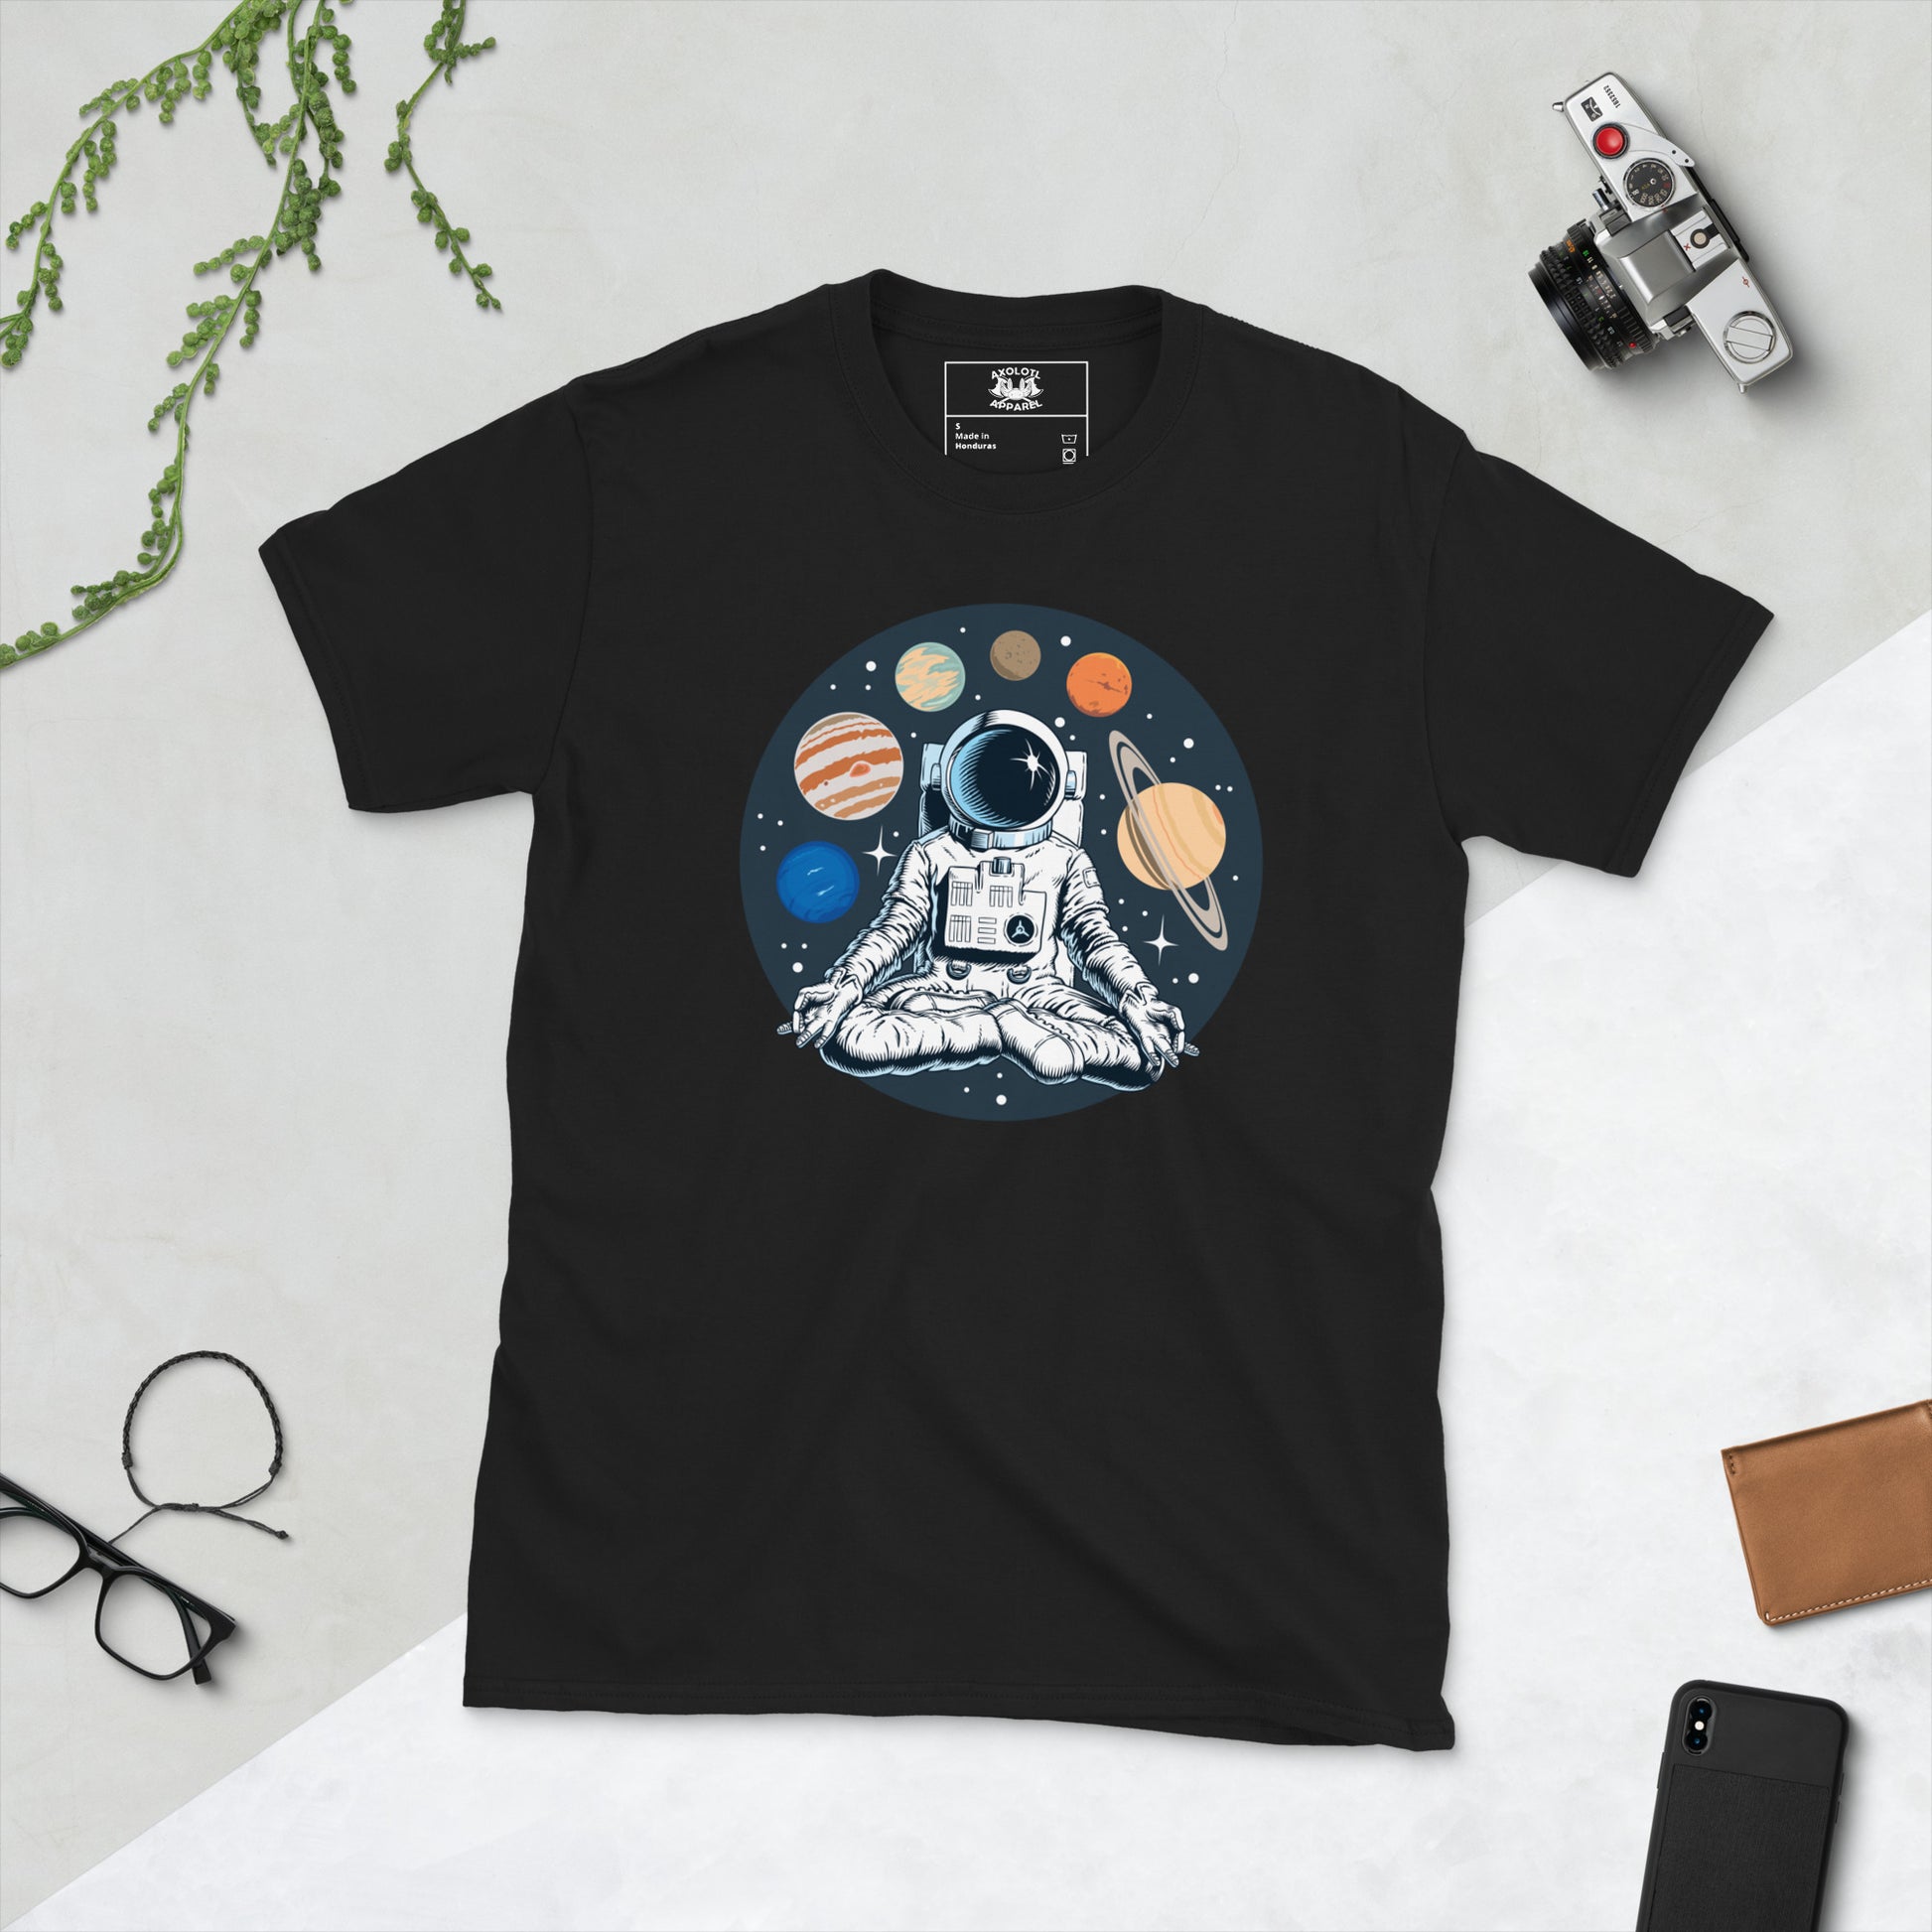 Ohmstronaut Short-sleeve Unisex Cosmic Meditating Astronaut T-shirt Black Flat